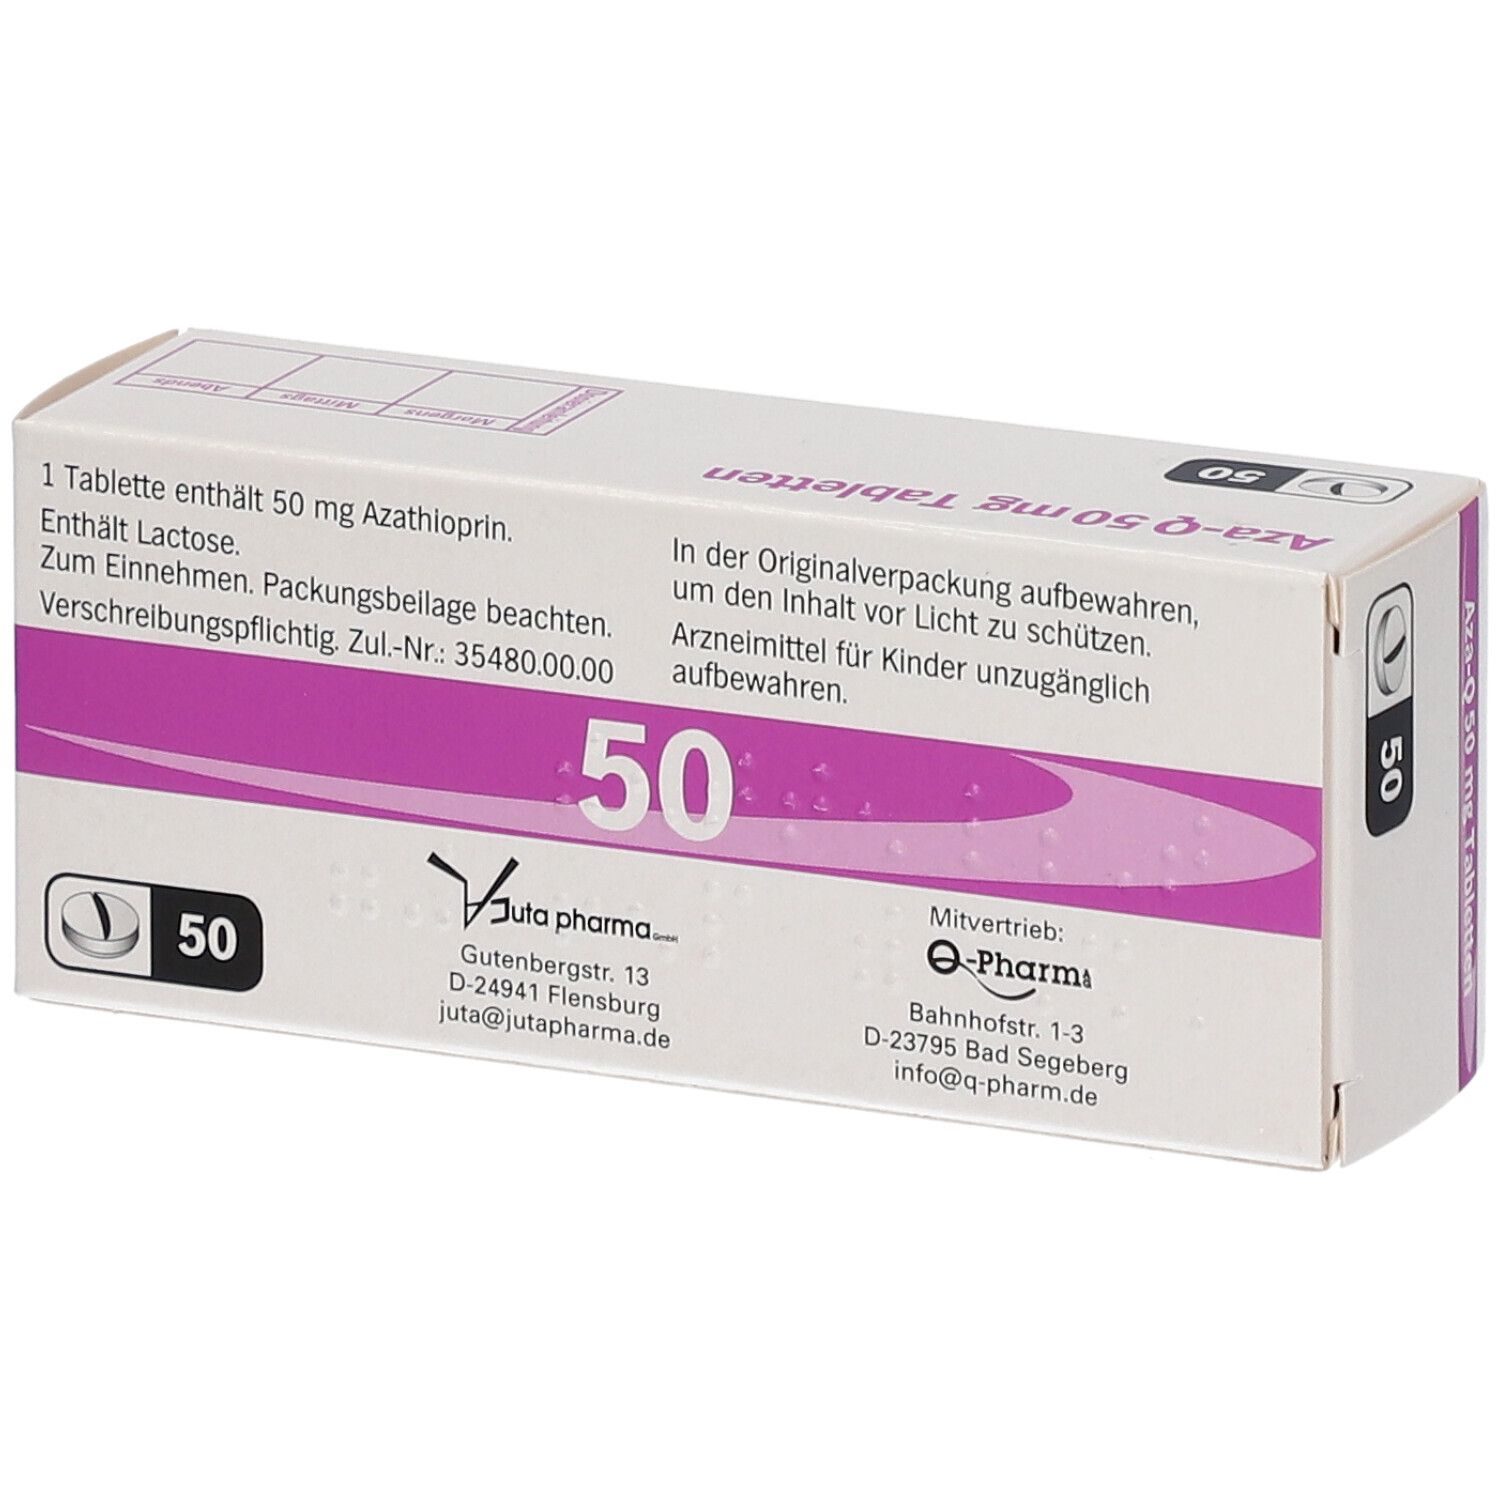 Aza-Q® 50 mg